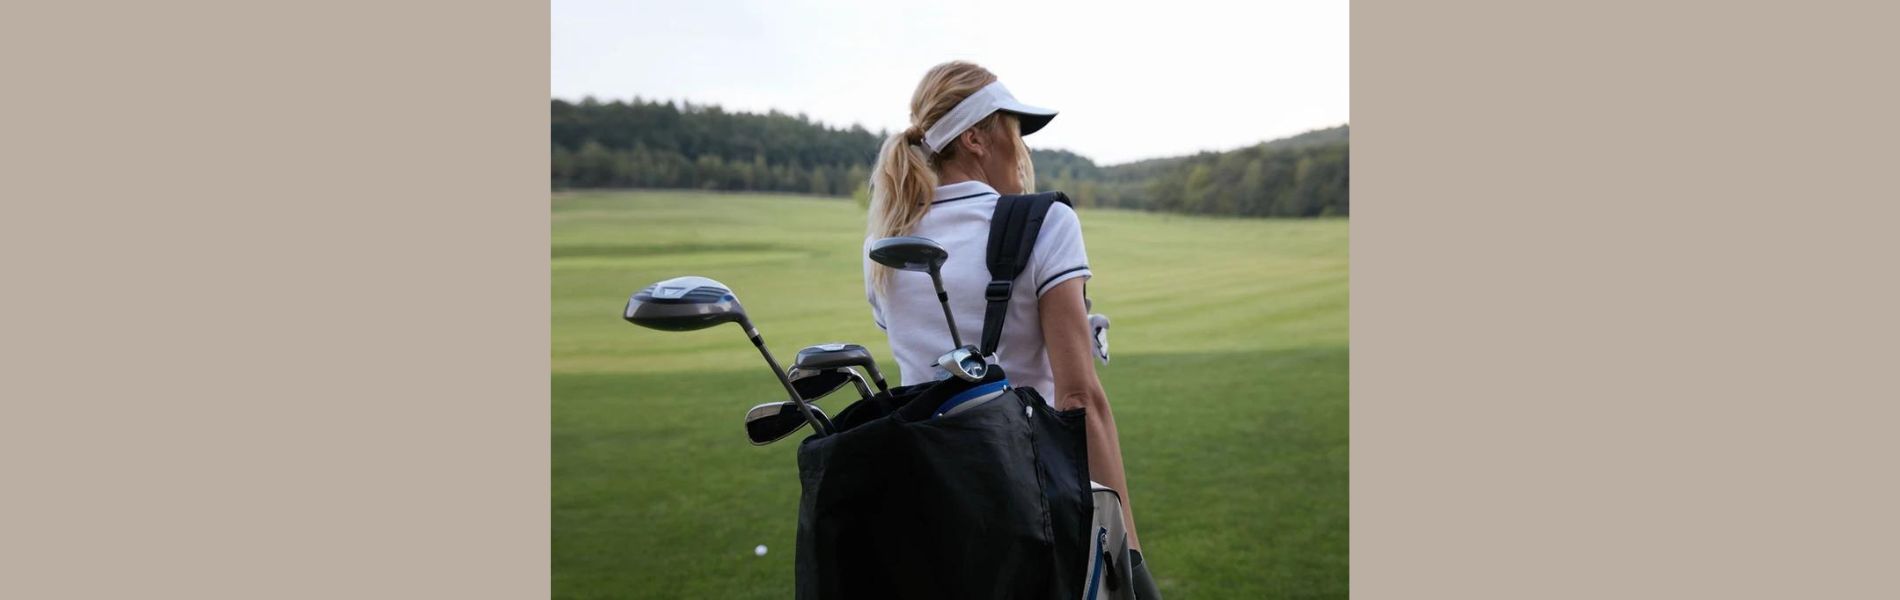 Golfer carrying bag